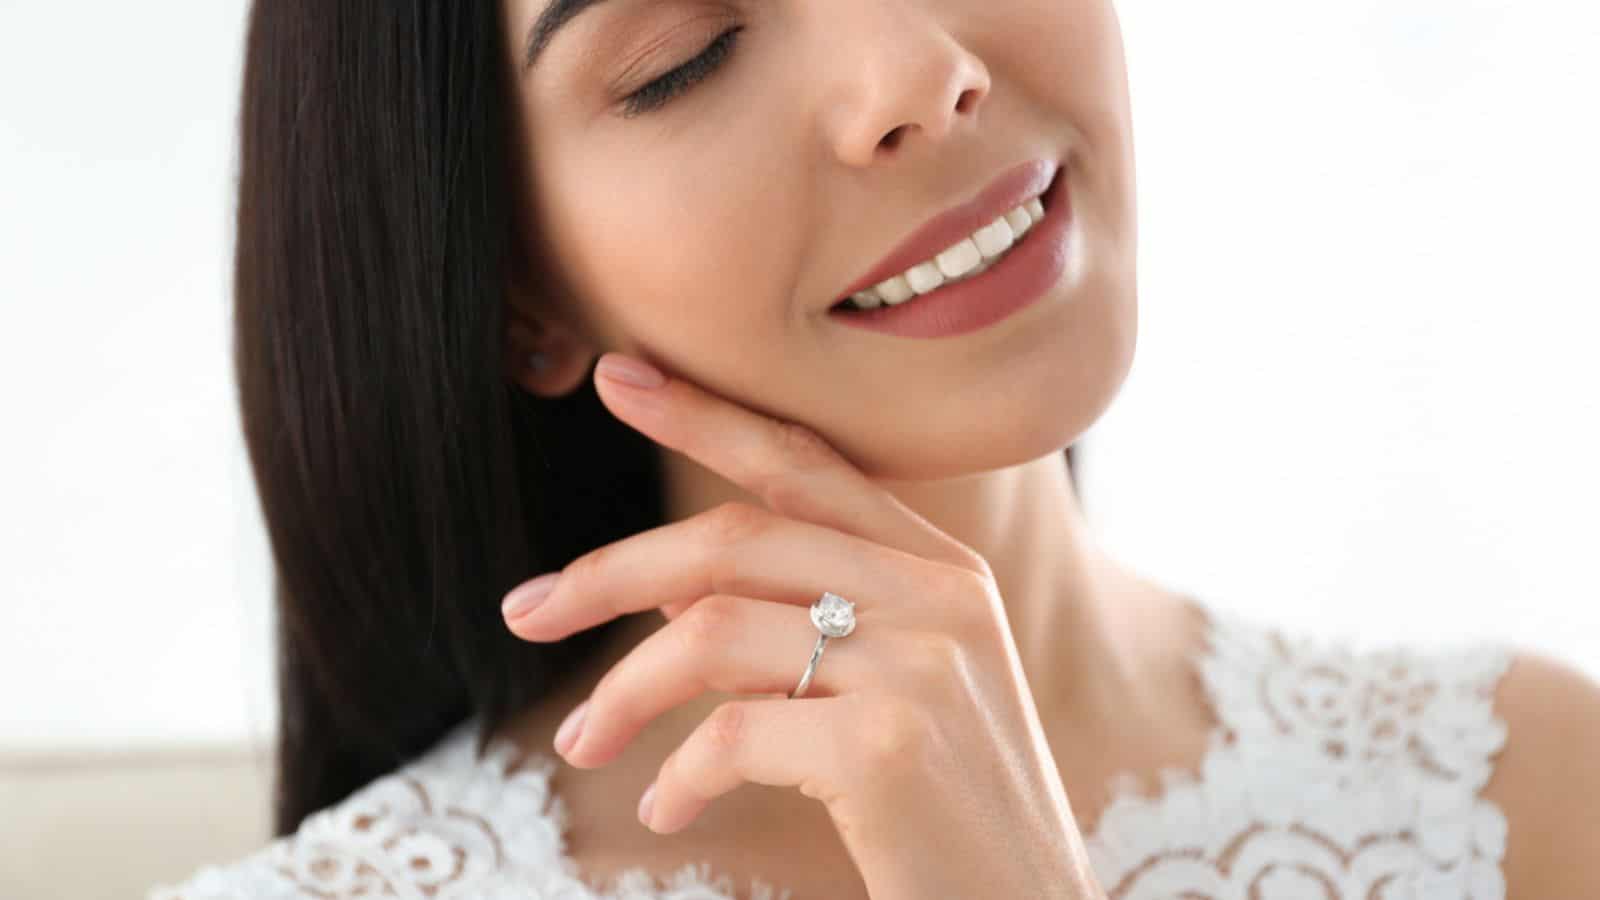 Young bride wearing beautiful engagement diamond ring